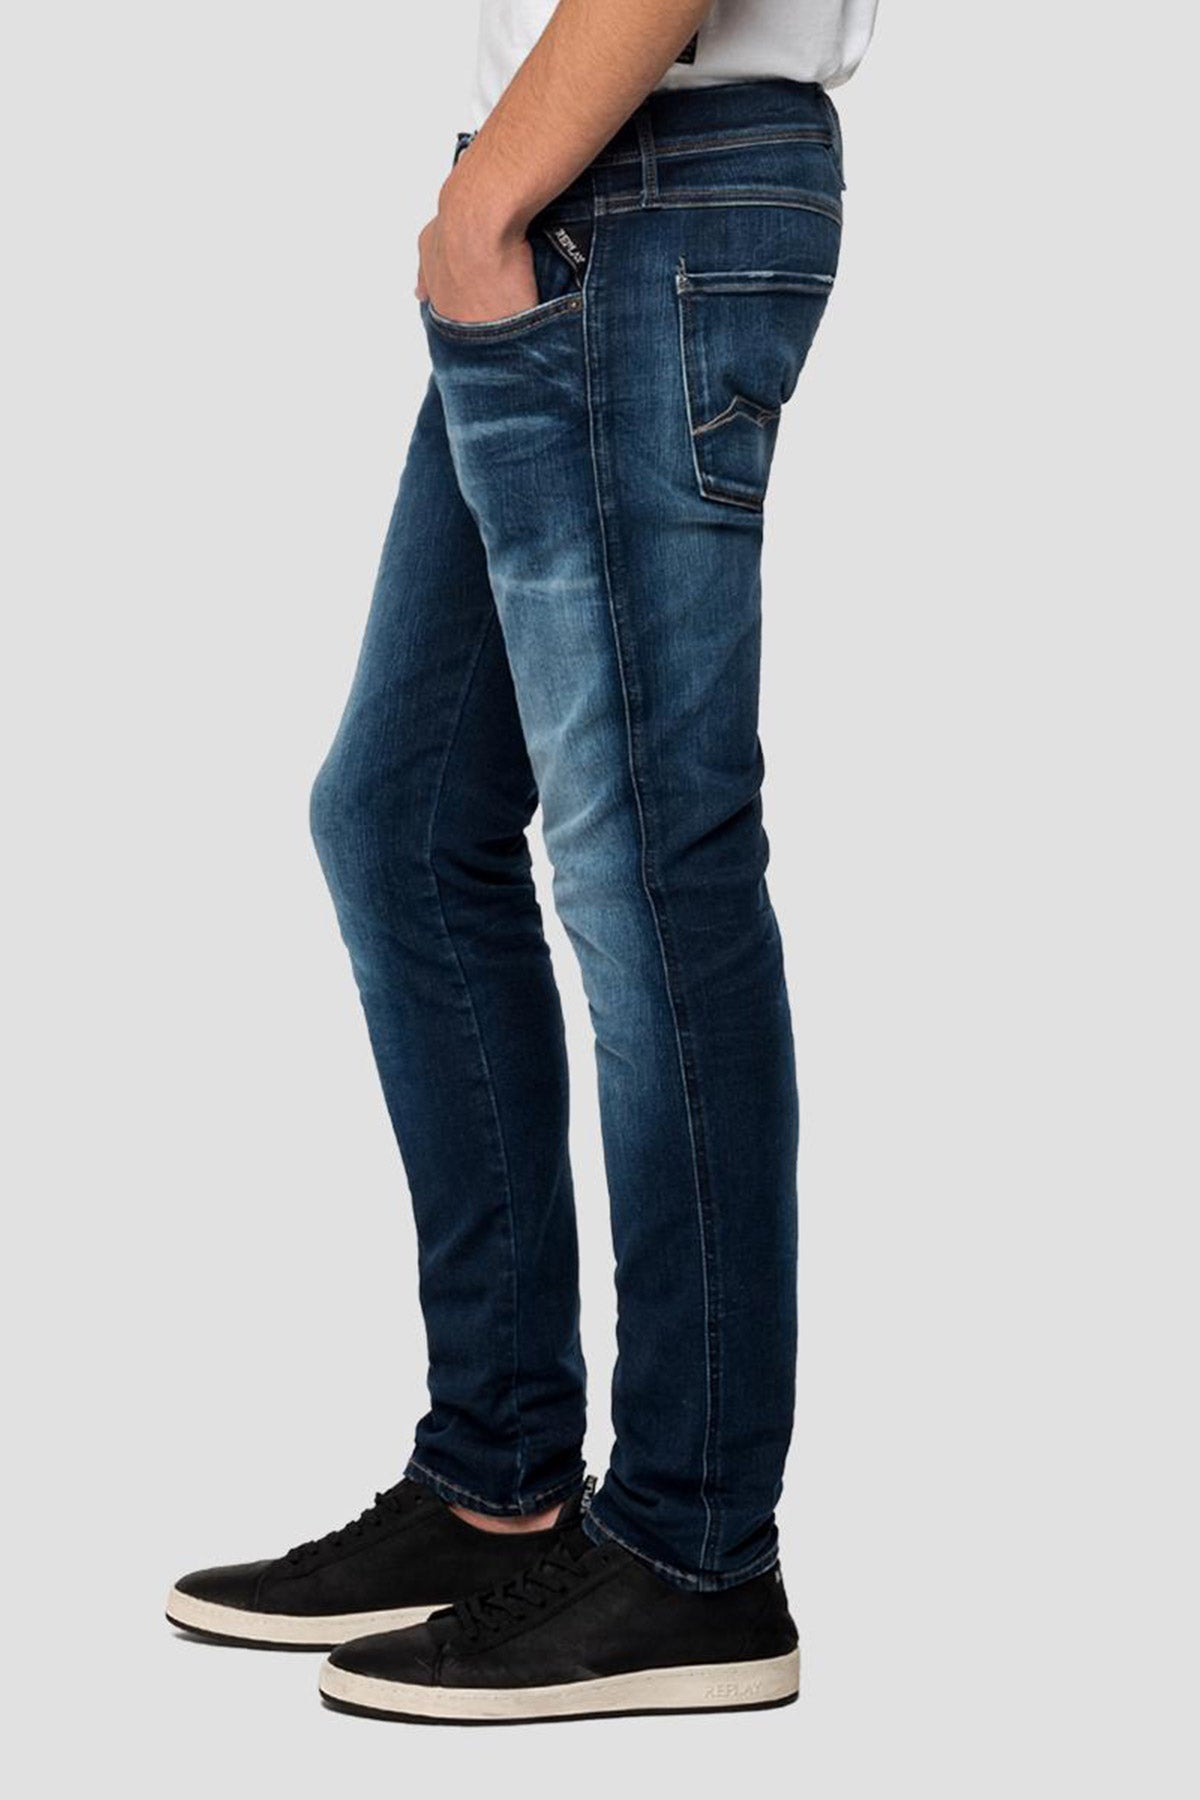 Replay Hyperflex Bio Anbass Slim Fit Jeans-Libas Trendy Fashion Store